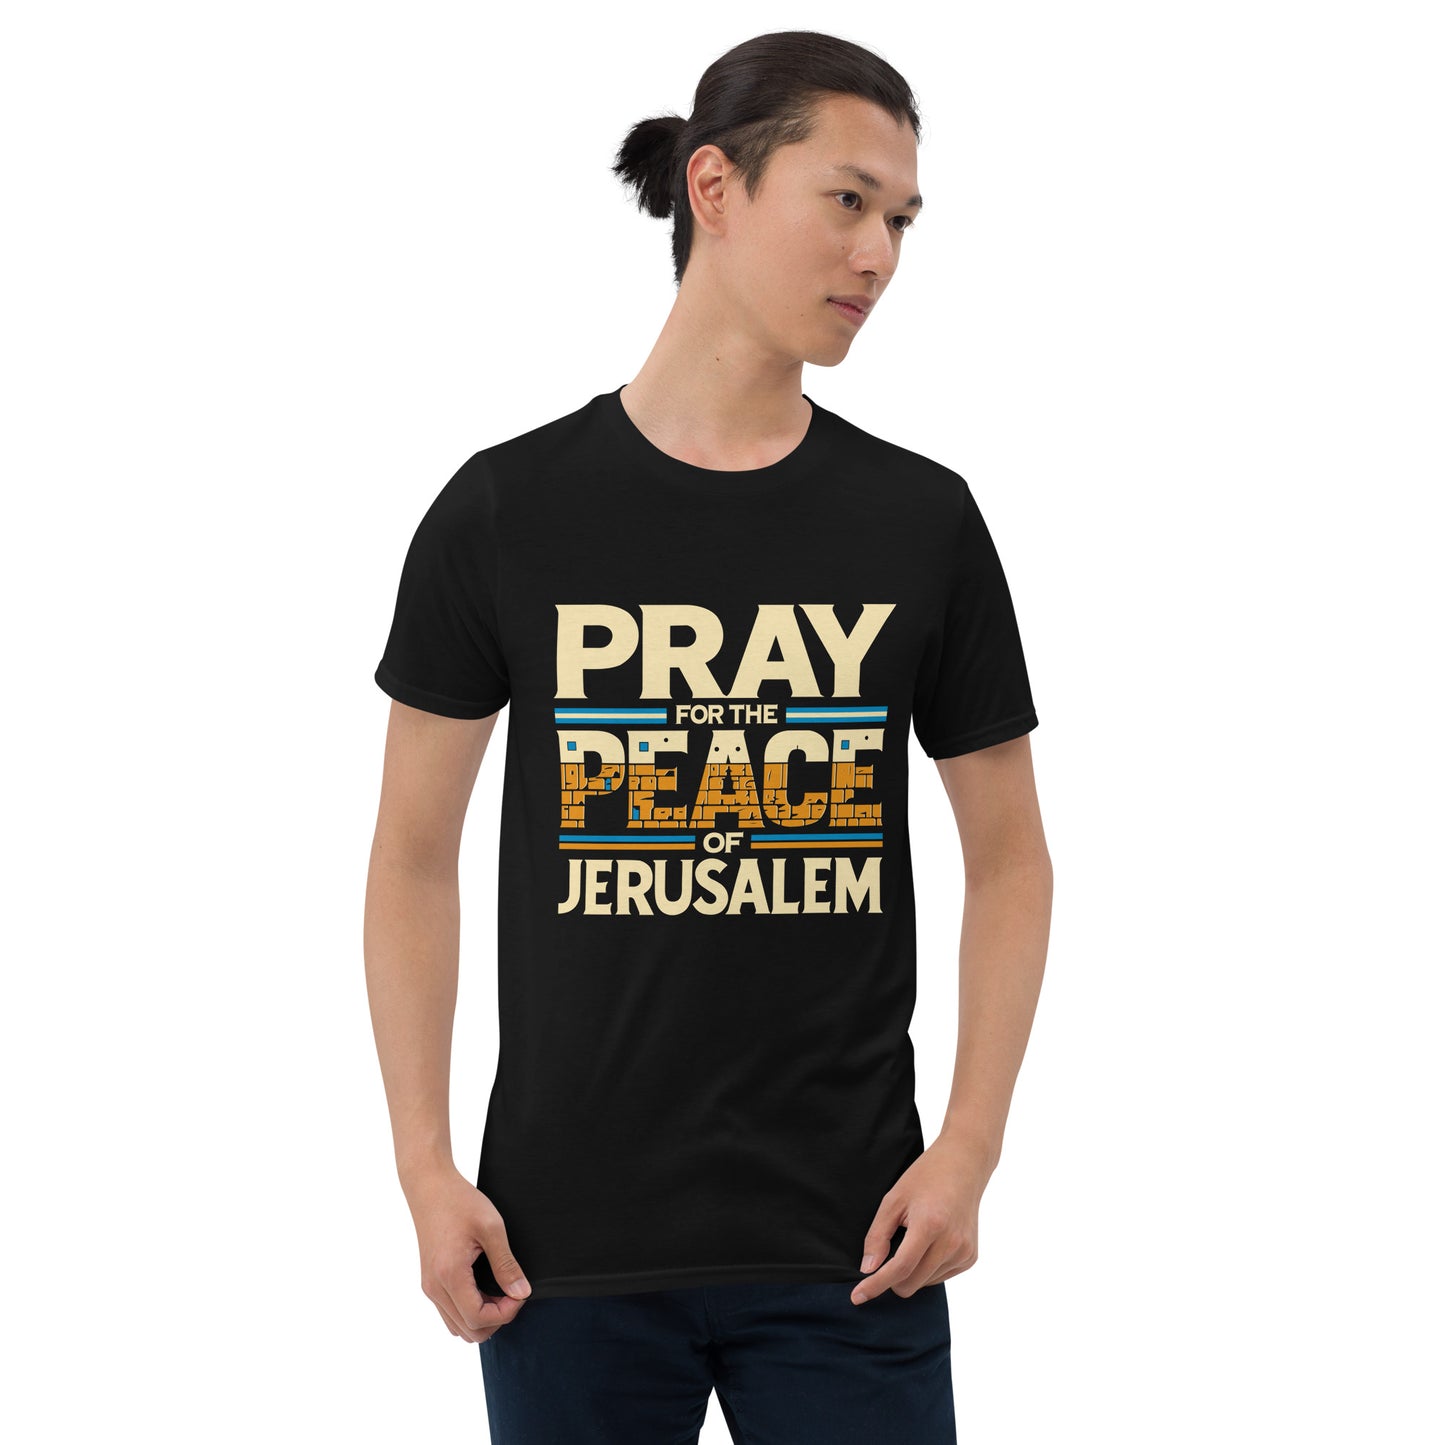 Camiseta unisex Oren por Jerusalén